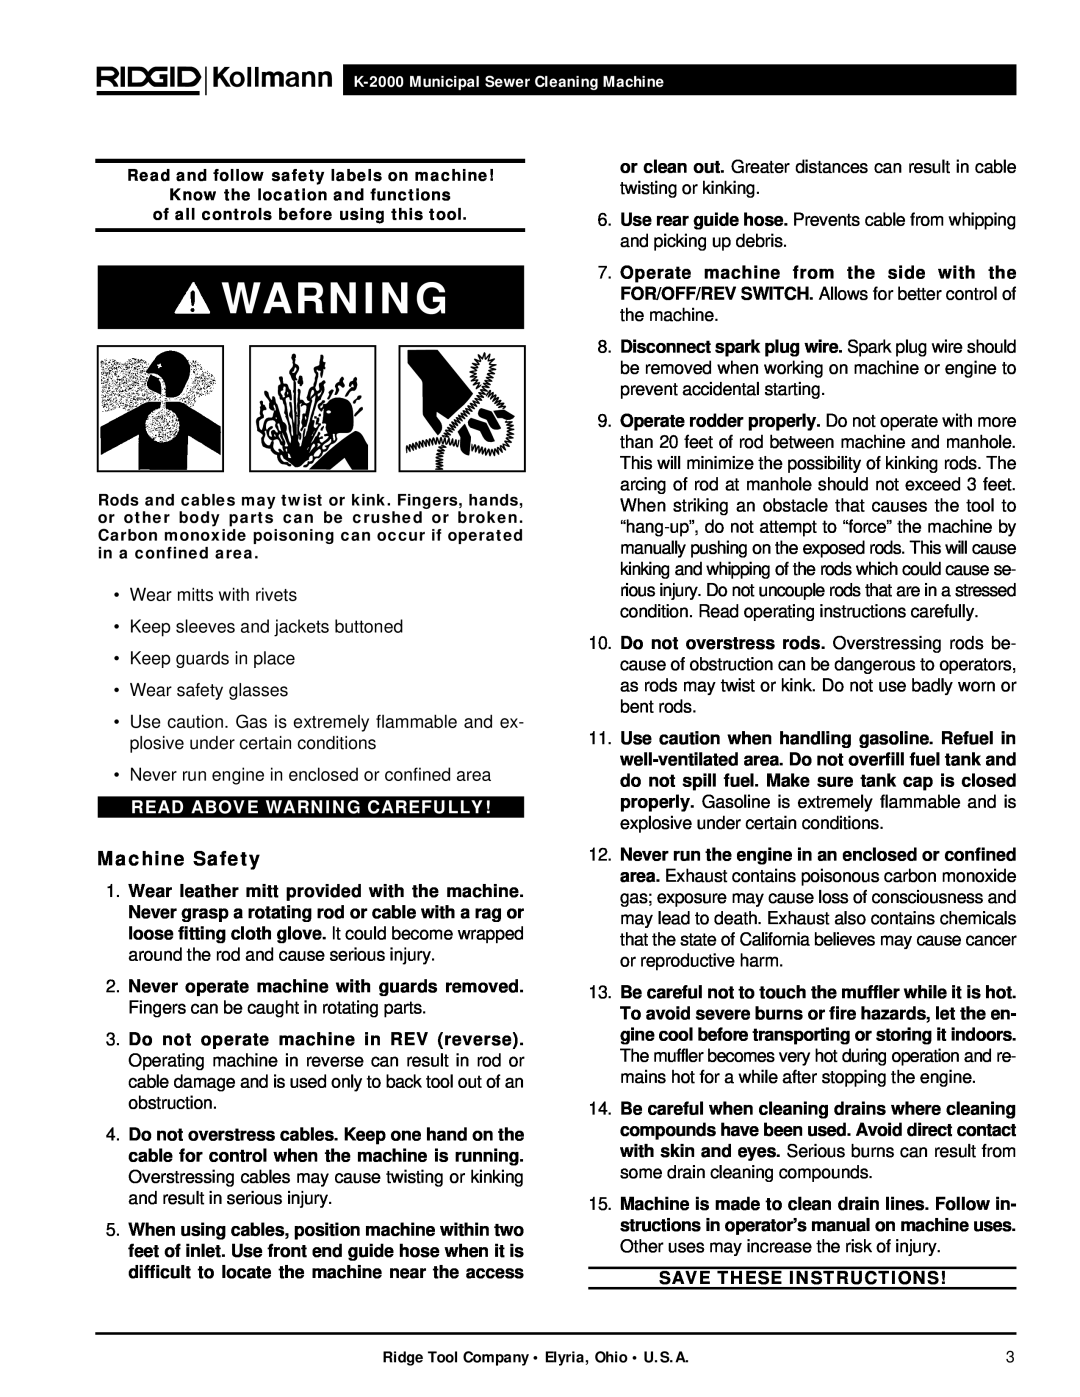 RIDGID manual Machine Safety, Read Above Warning Carefully, K-2000 Municipal Sewer Cleaning Machine 